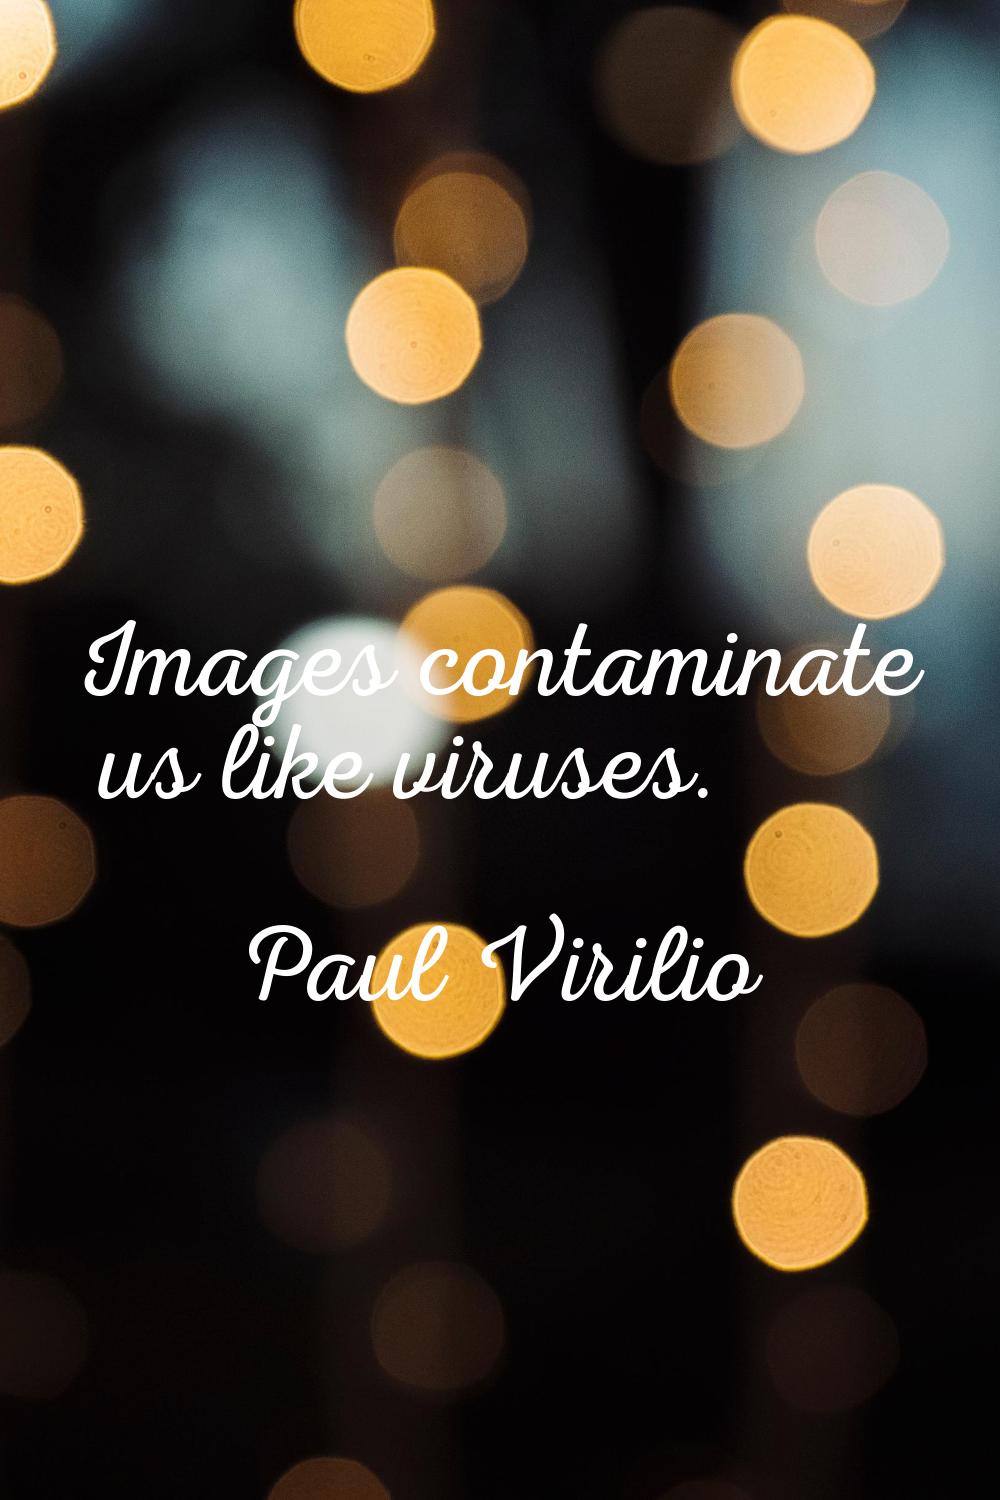 Images contaminate us like viruses.